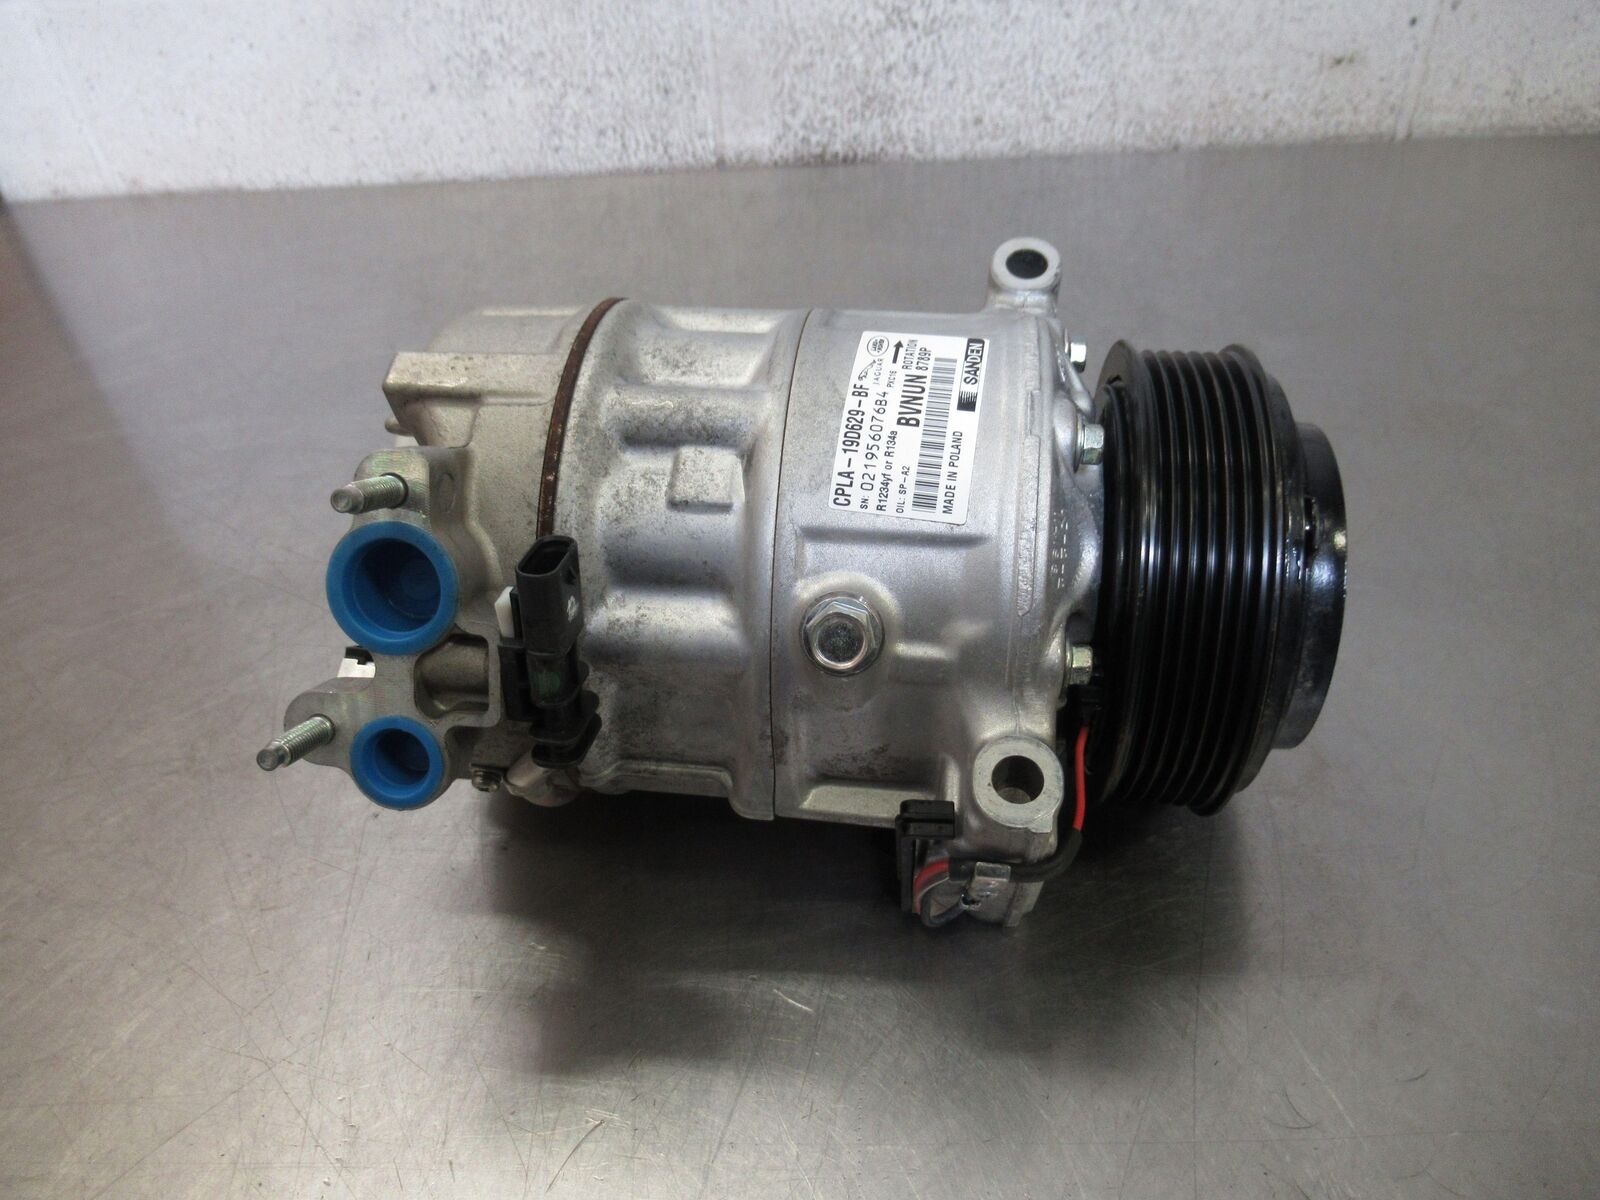 FITS 17 18 19 JAGUAR XE A/c AC Air Compressor Cpla-19d629-bf ONLY 487 KM's!!!!